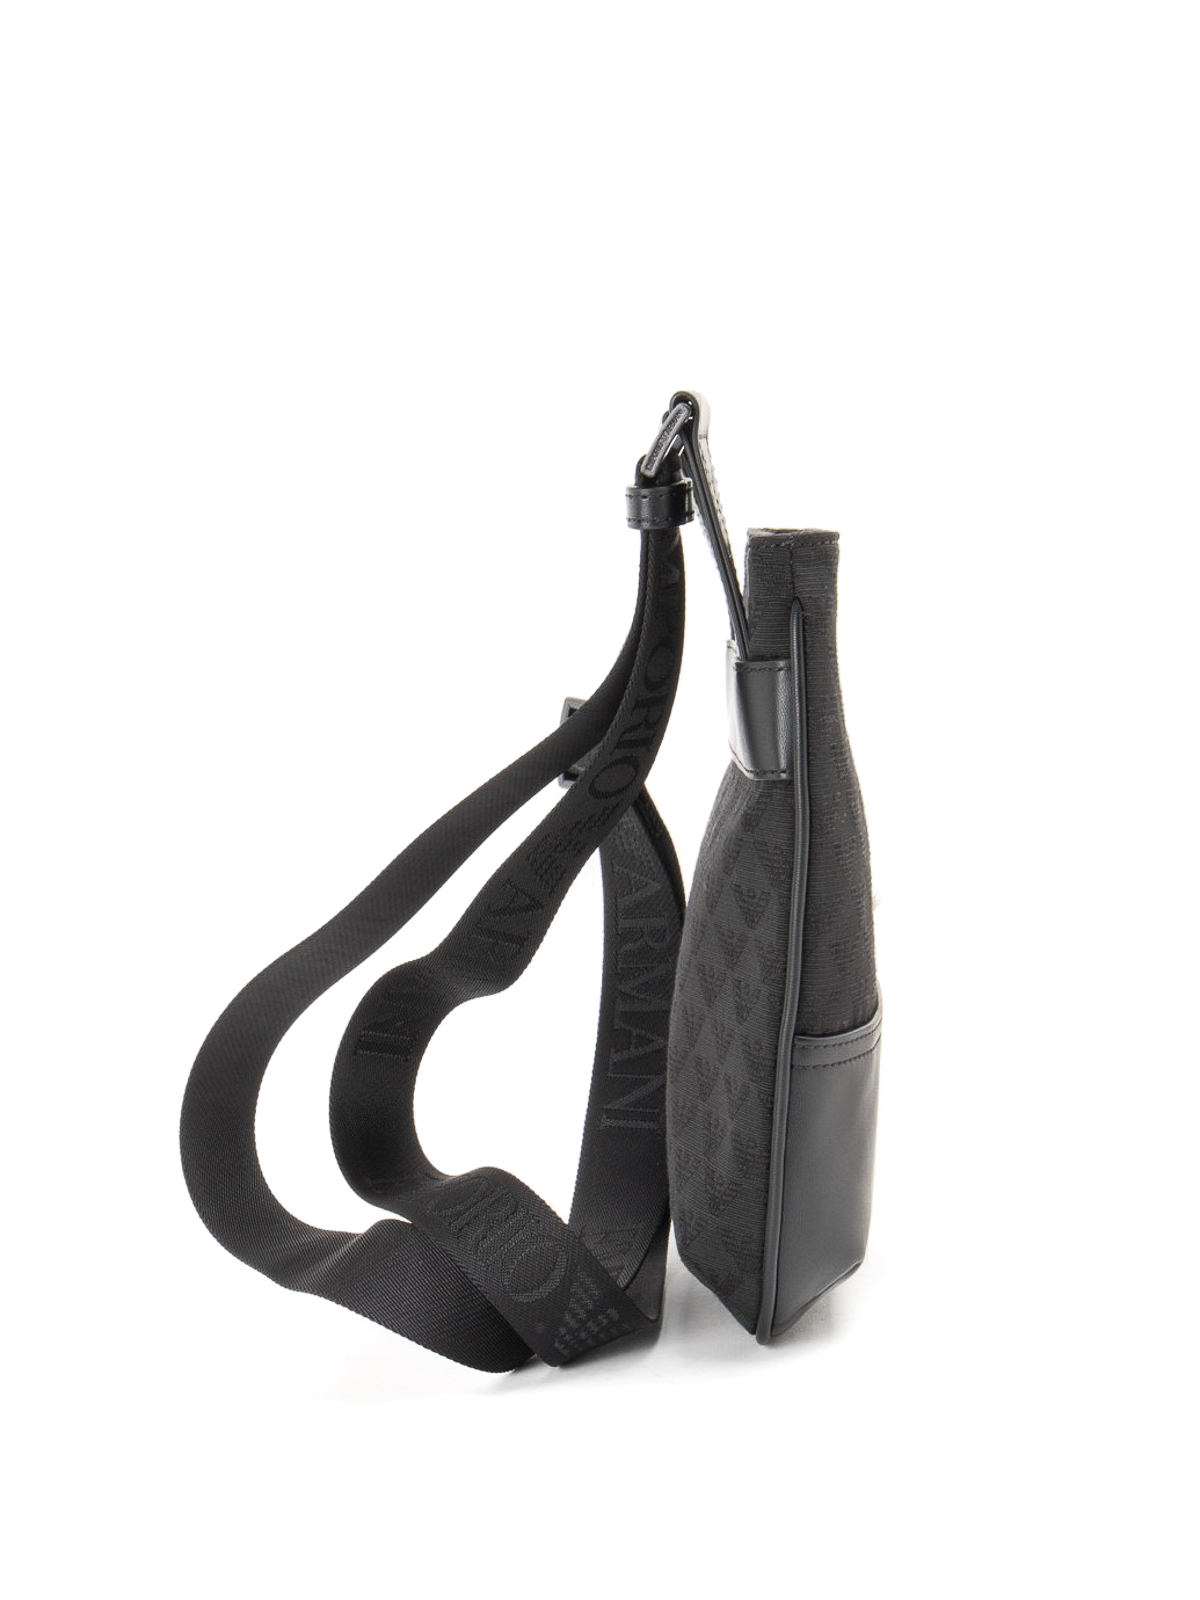 EMPORIO ARMANI: one-shoulder bag in jacquard fabric - Black  Emporio Armani  shoulder bag Y4O419Y022V online at